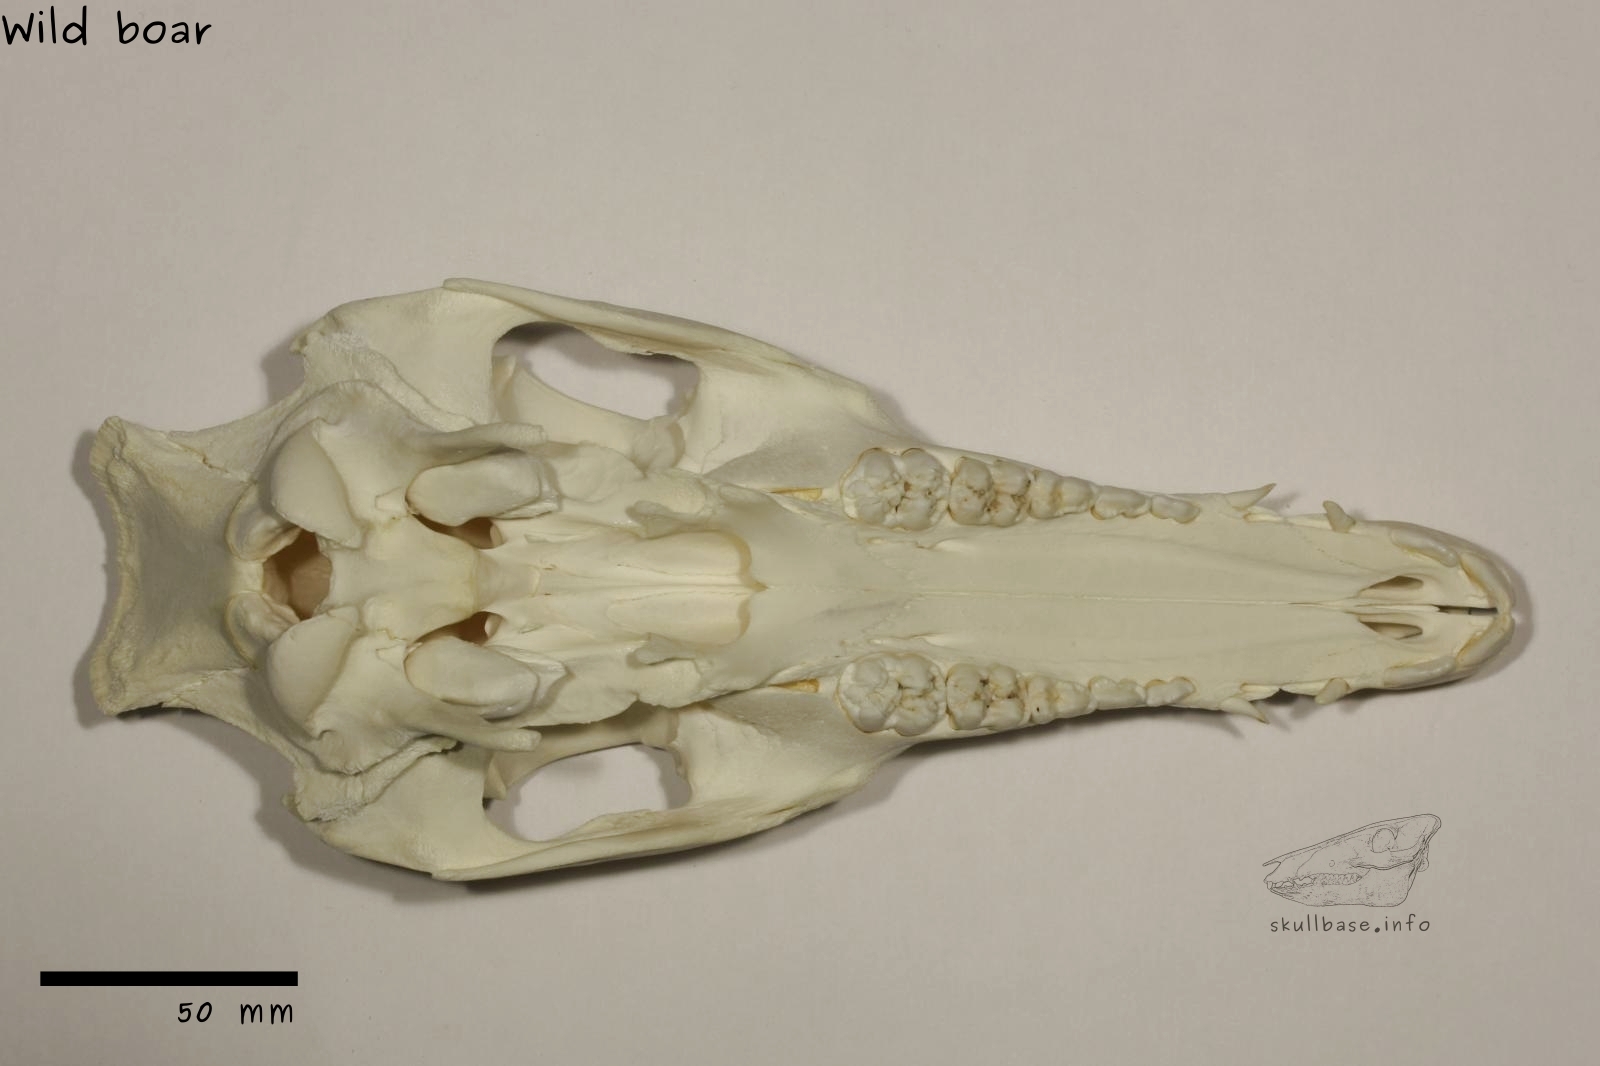 Wild boar (Sus scrofa) skull ventral view